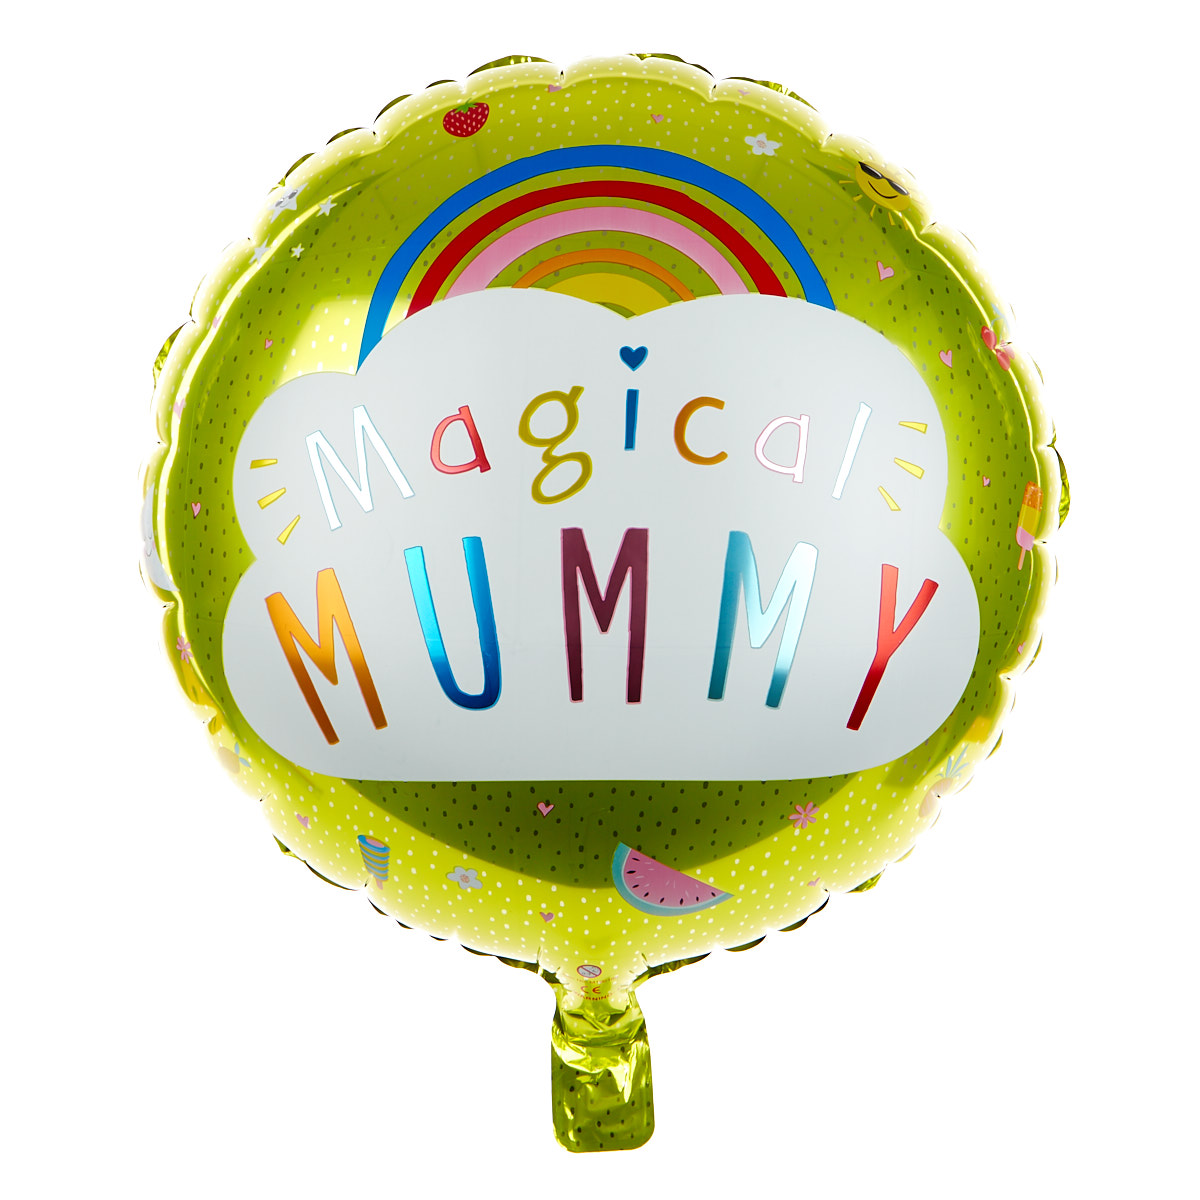 18-Inch Helium Balloon - Magical Mummy, Rainbow